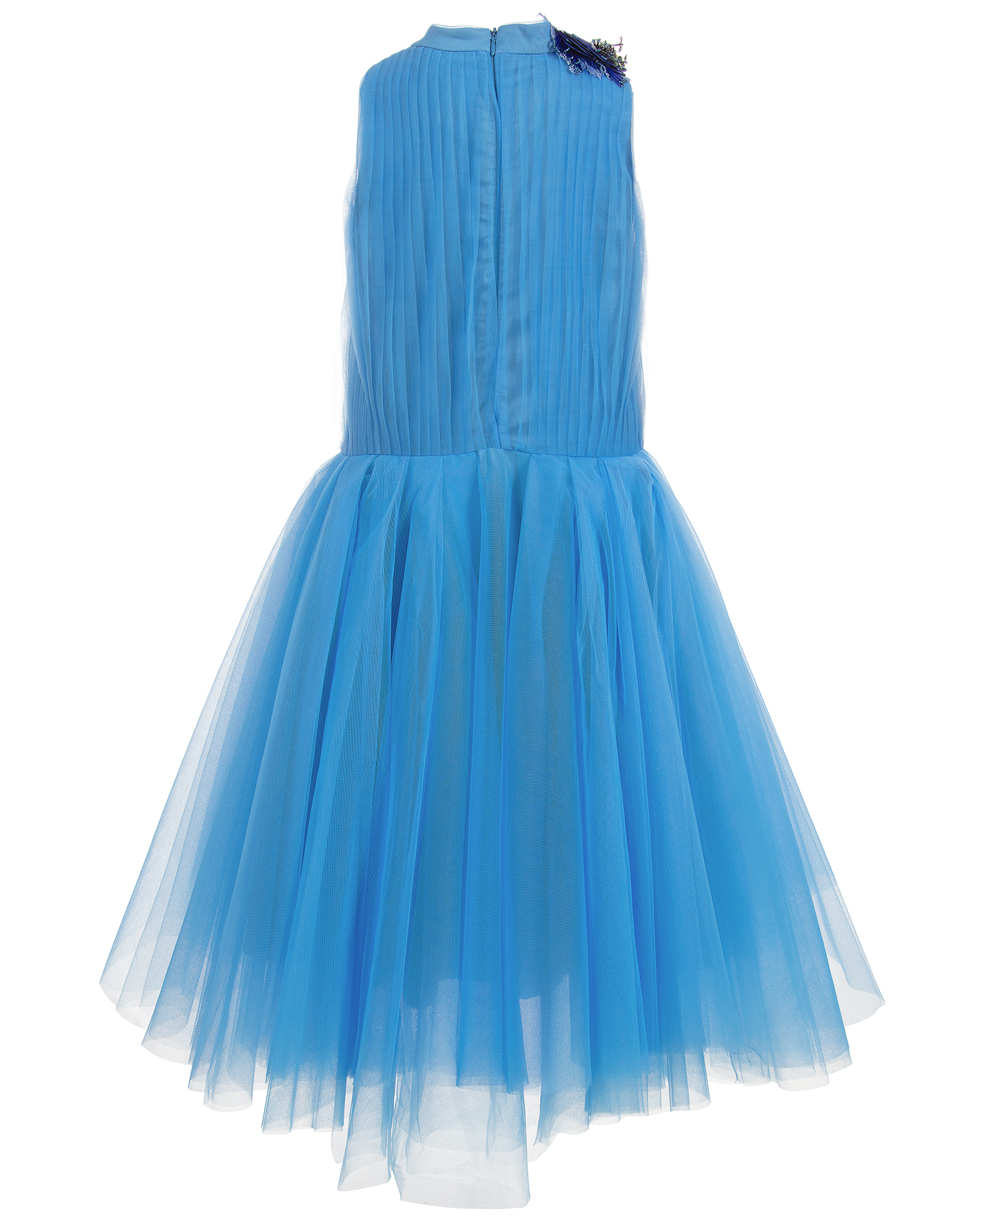 Blue Maxi Dress Tulle Skirt Sleeveless Flowergirl Wedding Dress